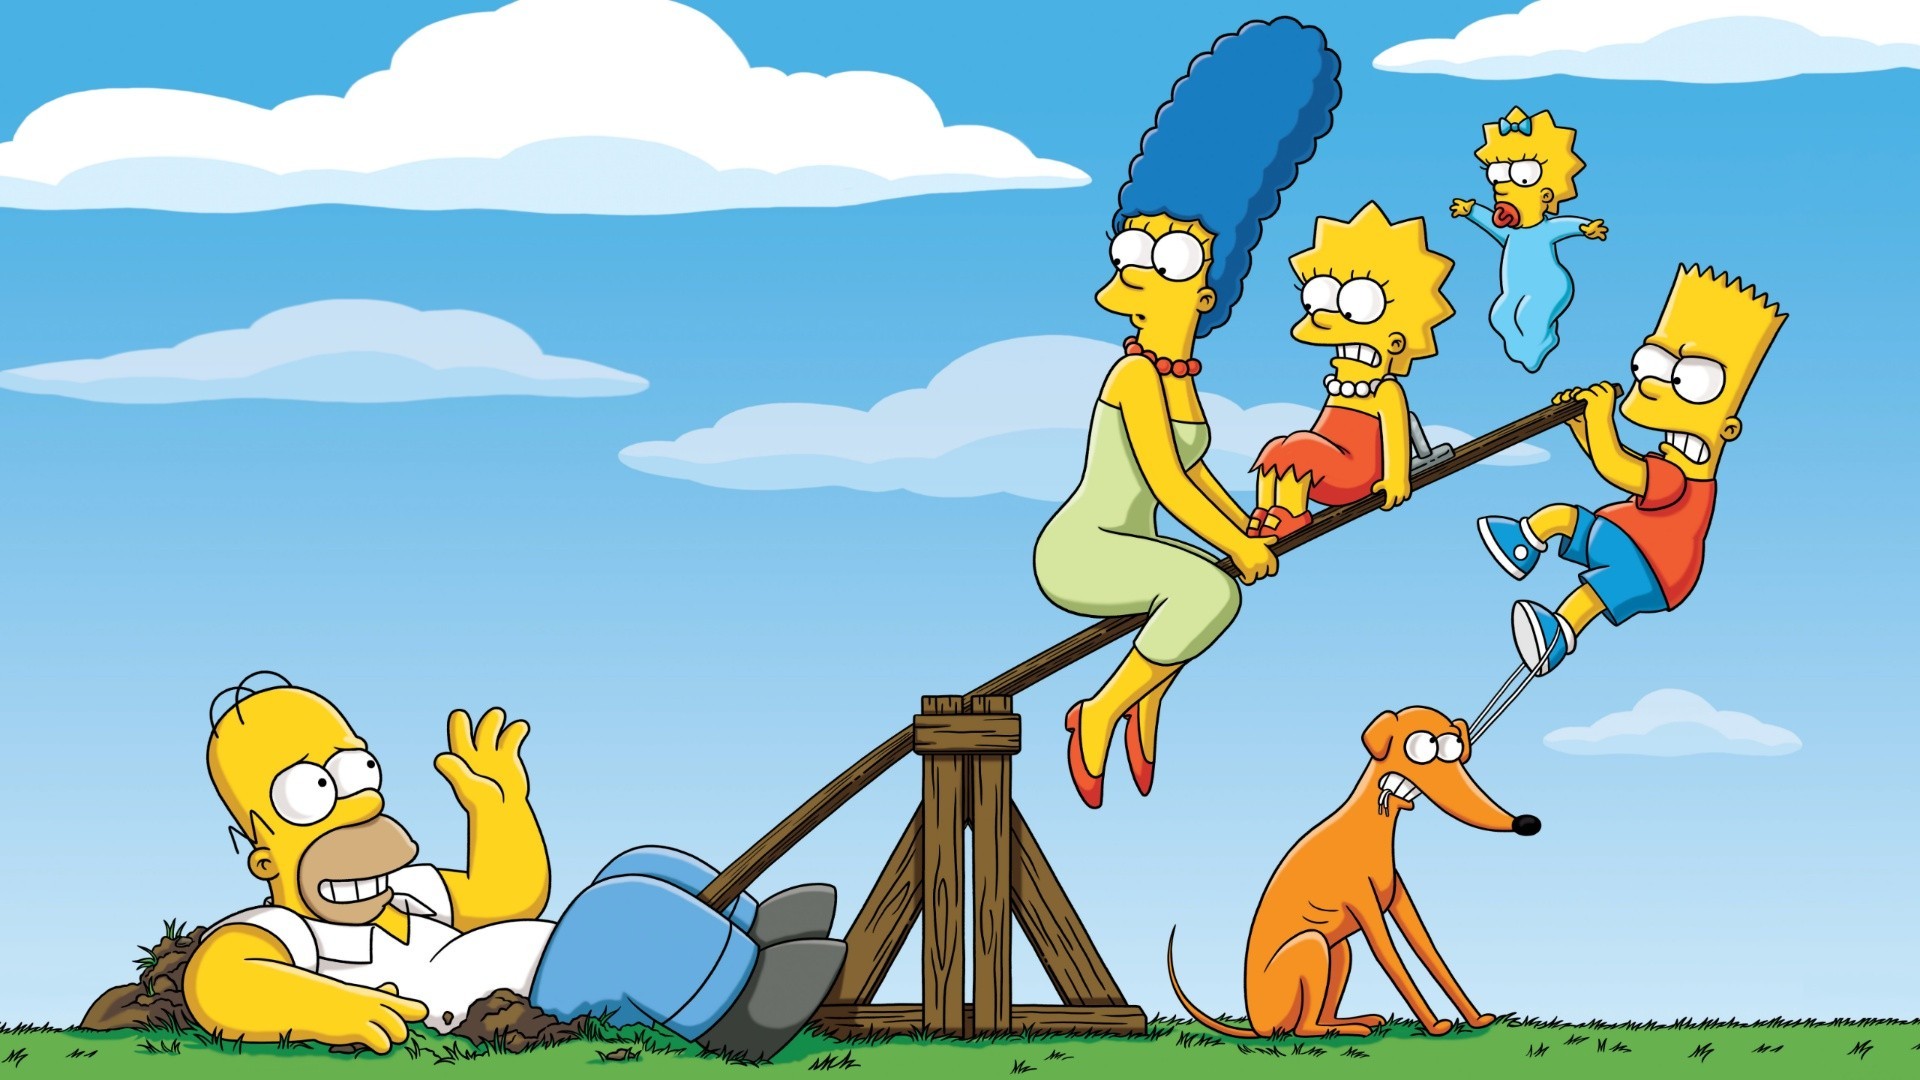 The Simpsons Cartoon - Wallpaper, High Definition, High Quality, Widescreen